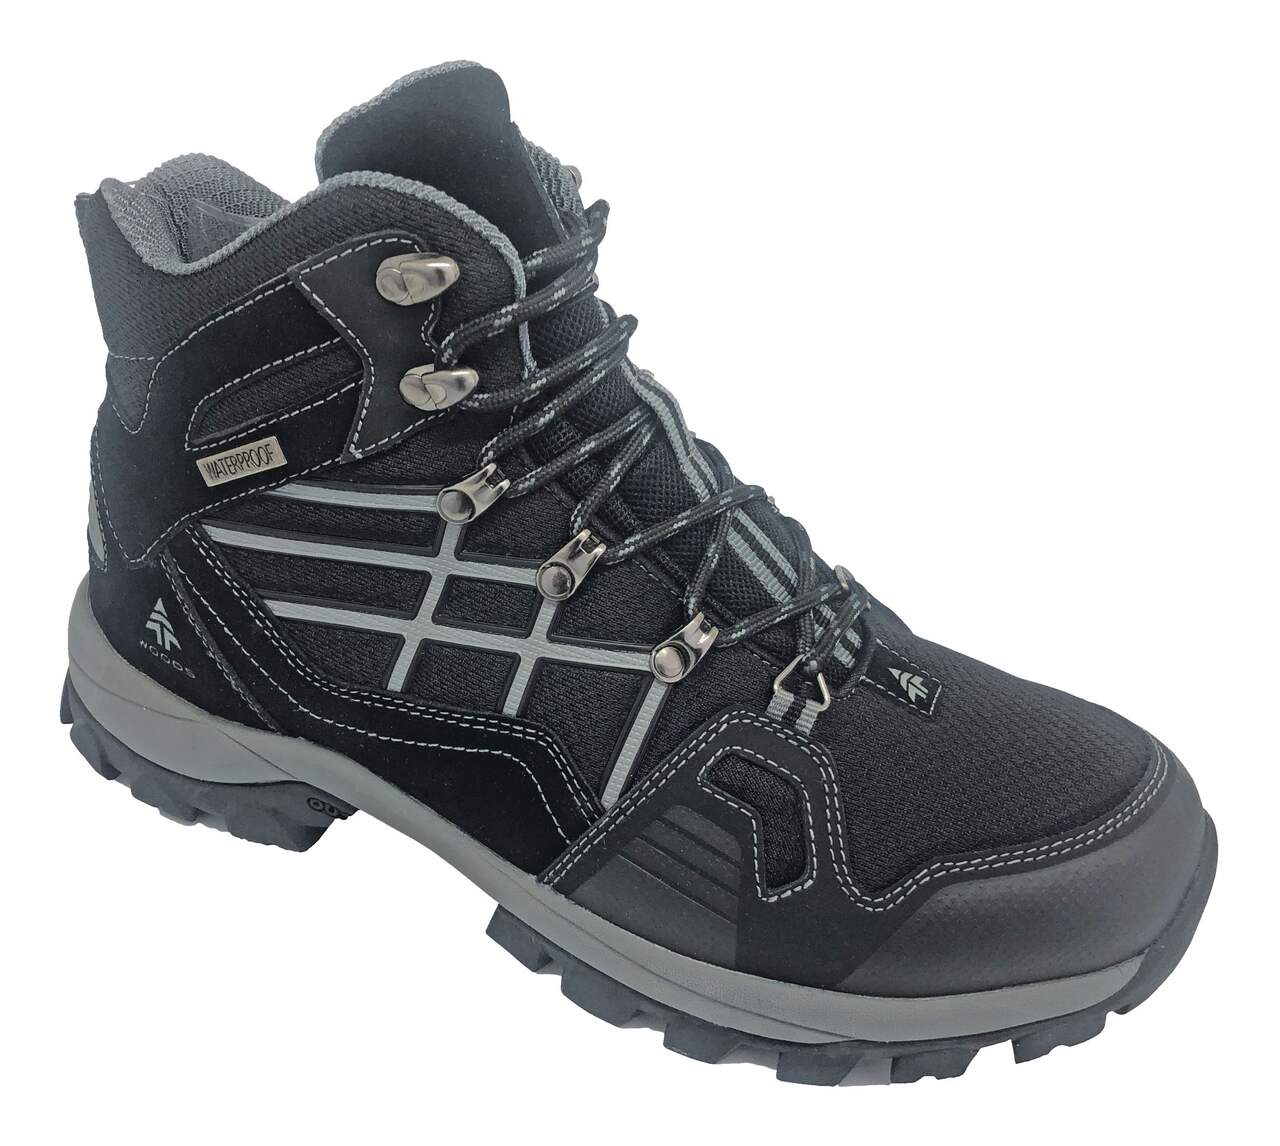 Woods™ Men's Mid-Cut Lightweight Waterproof Hiking Boots, Black